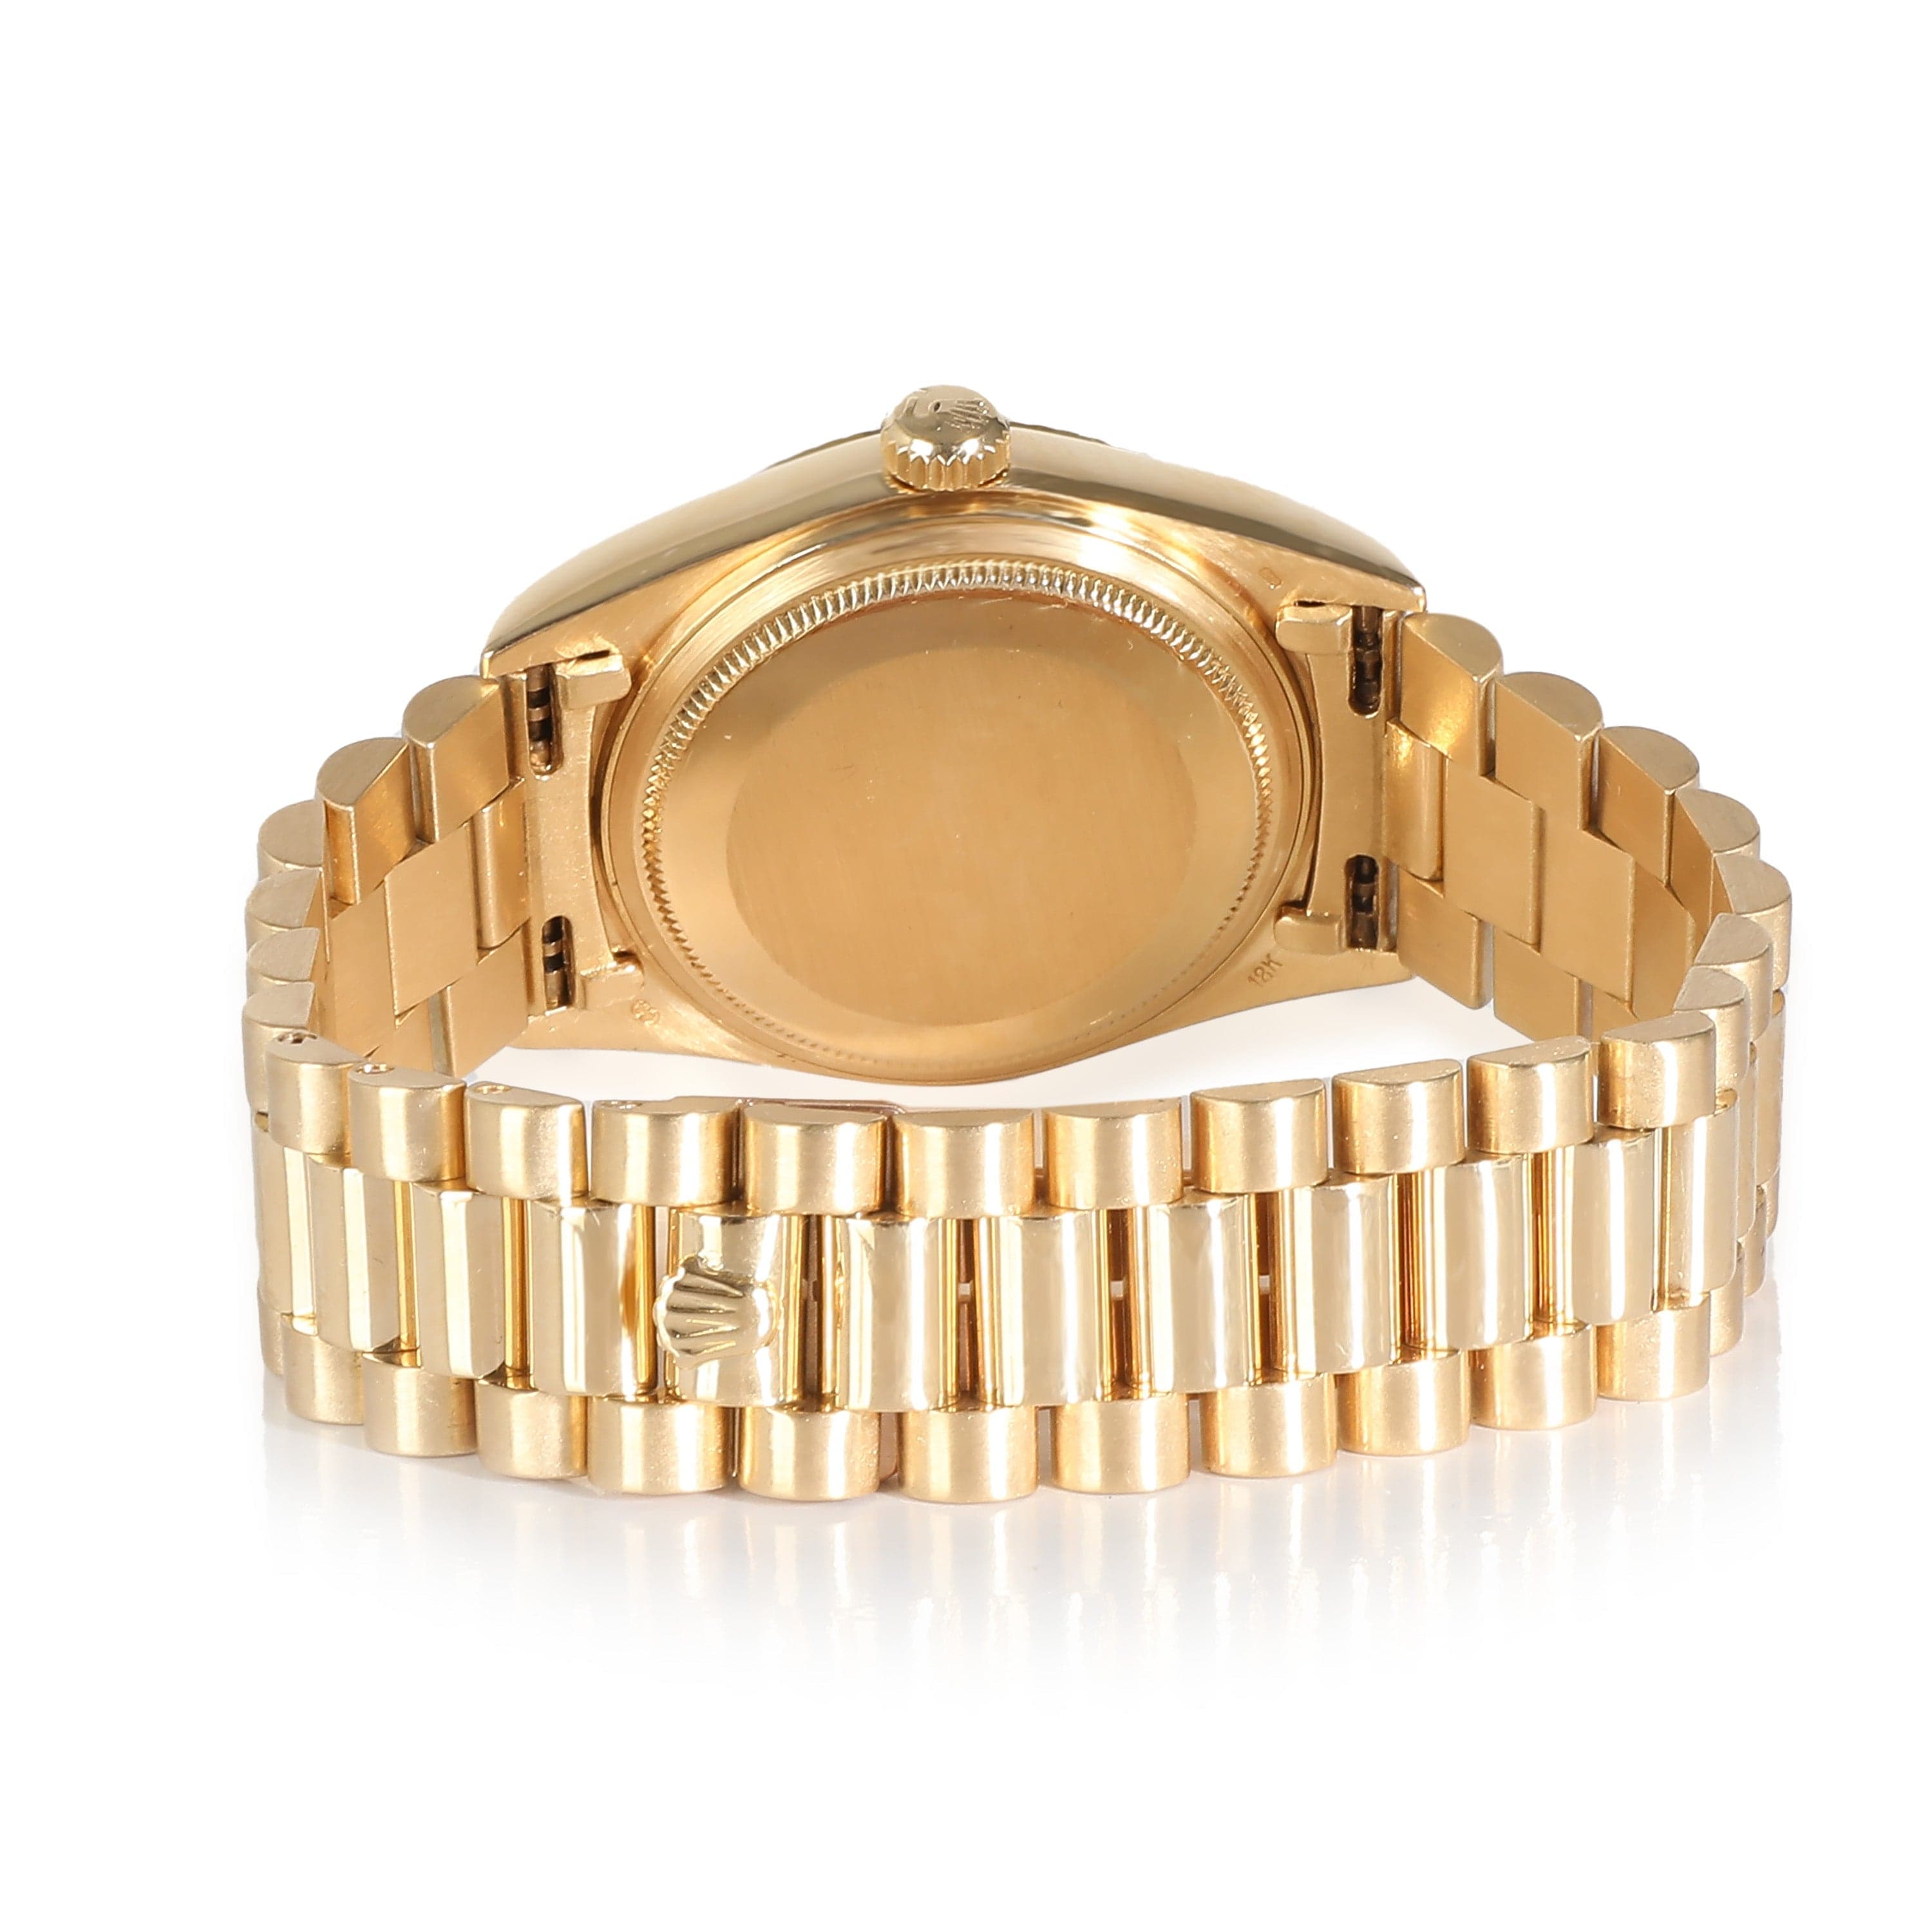 Rolex Rolex Day-Date 18038 Men's Watch in 18kt Yellow Gold